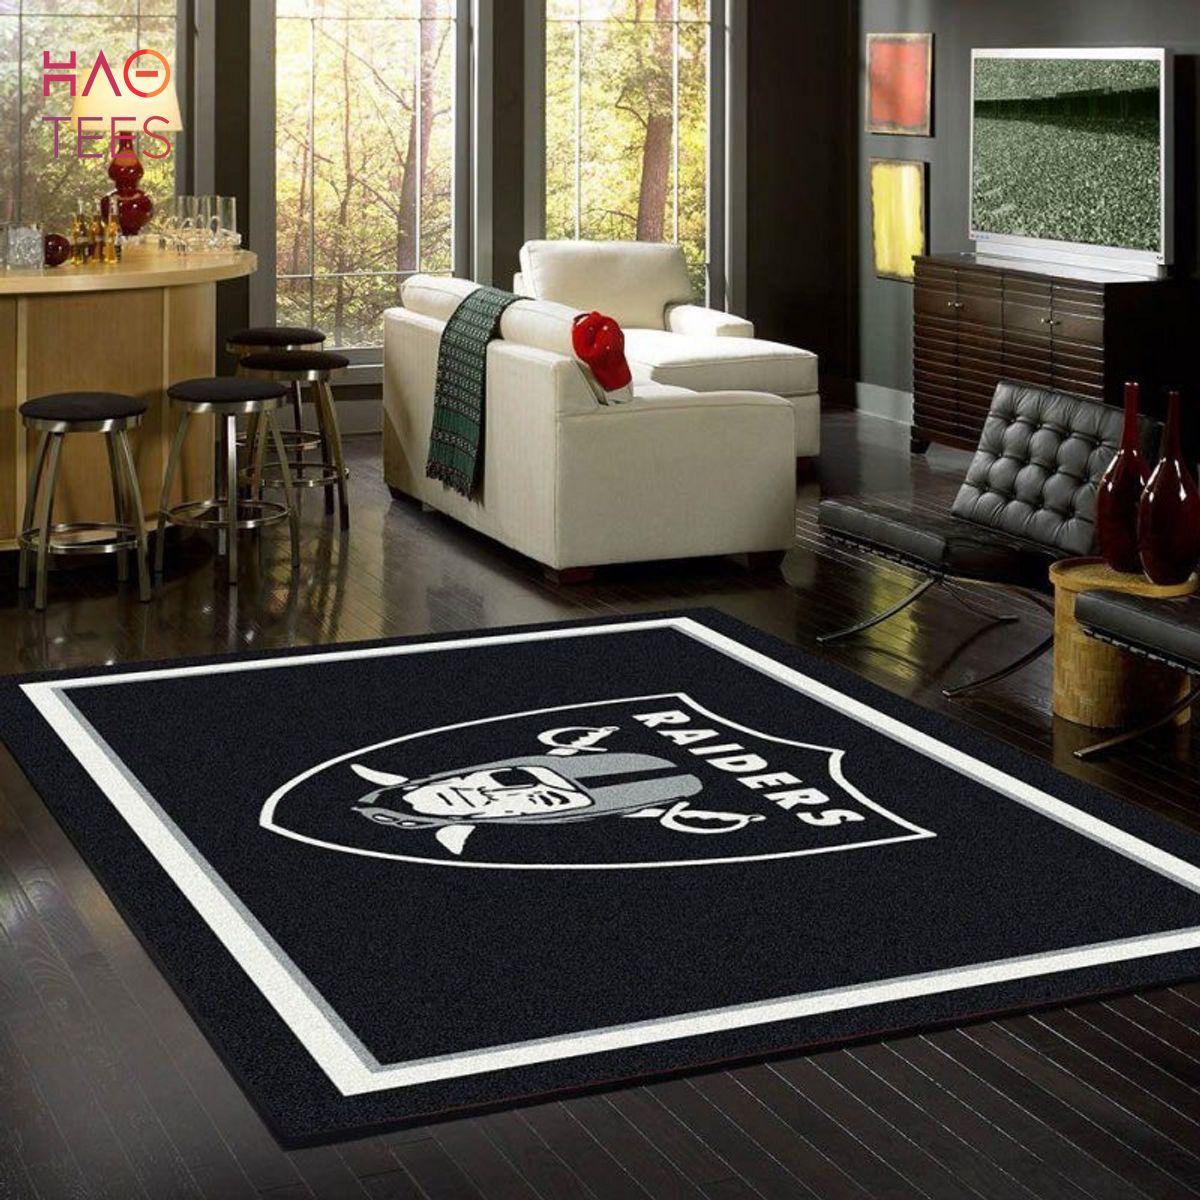 BEST Oakland Raiders Nfl Carpet Living Room Rugs